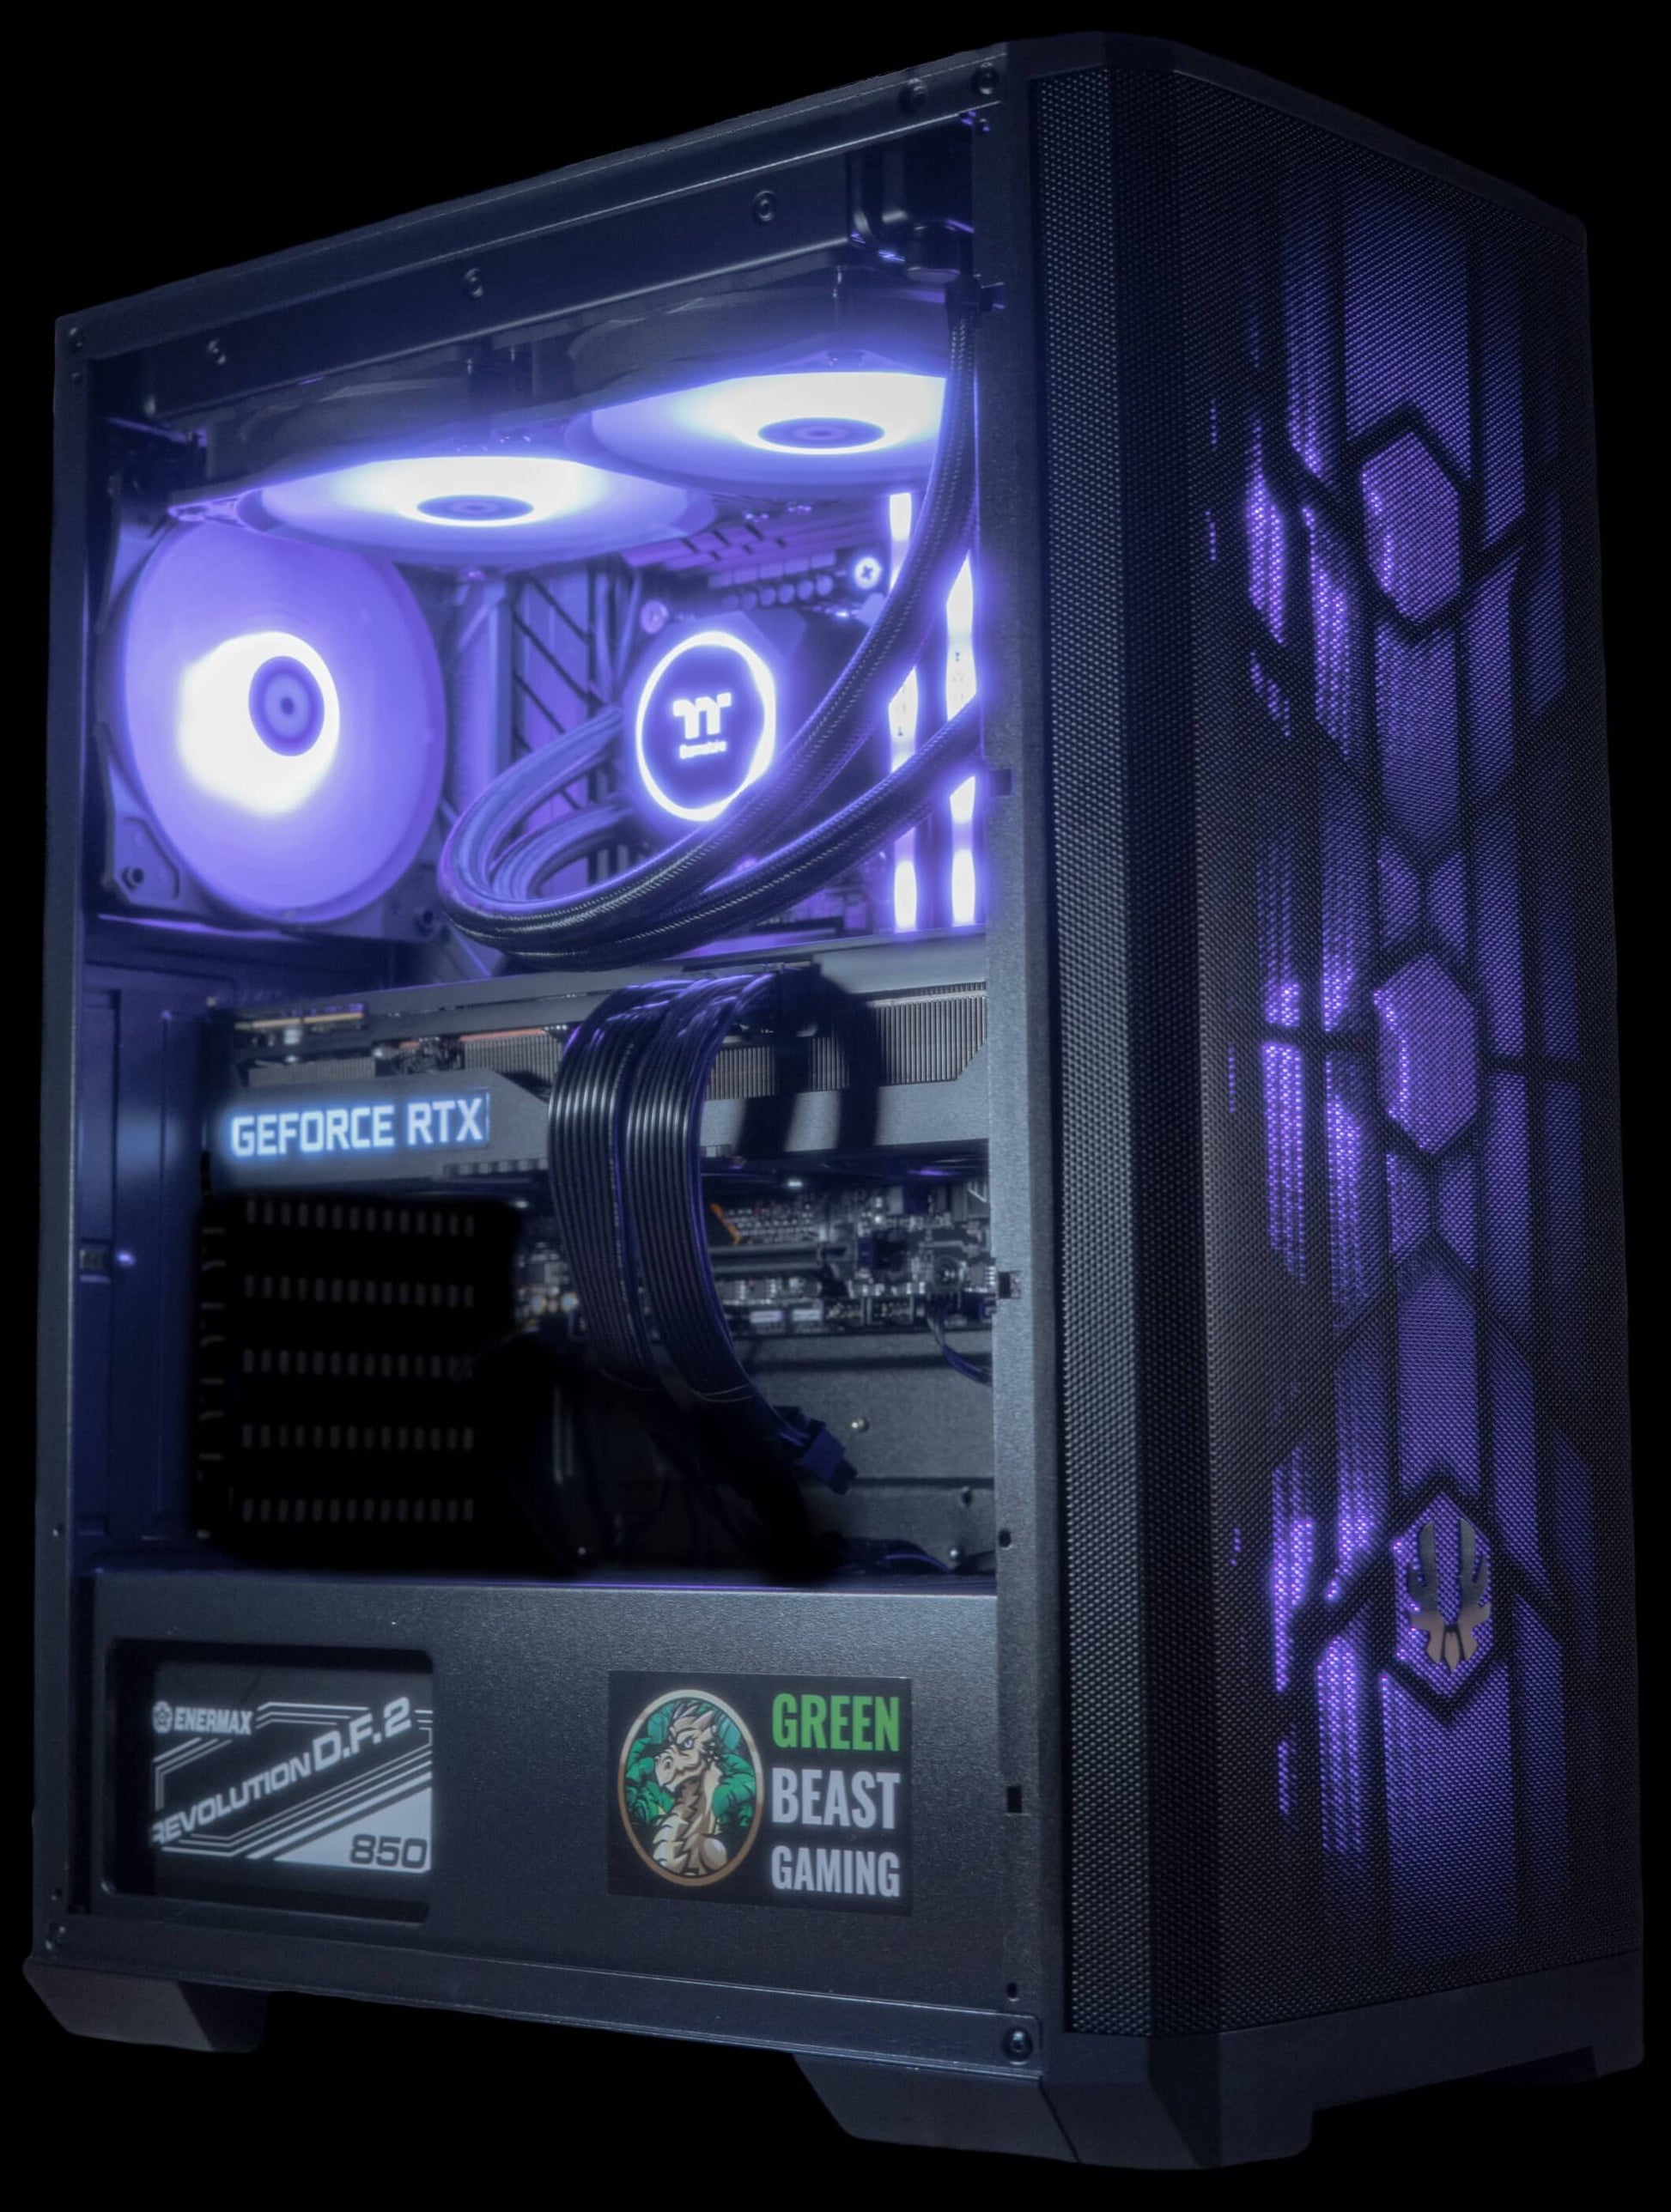 Prebuilt Customizable Gaming PC by Green Beast Gaming in Nova Mesh case Purple RGB